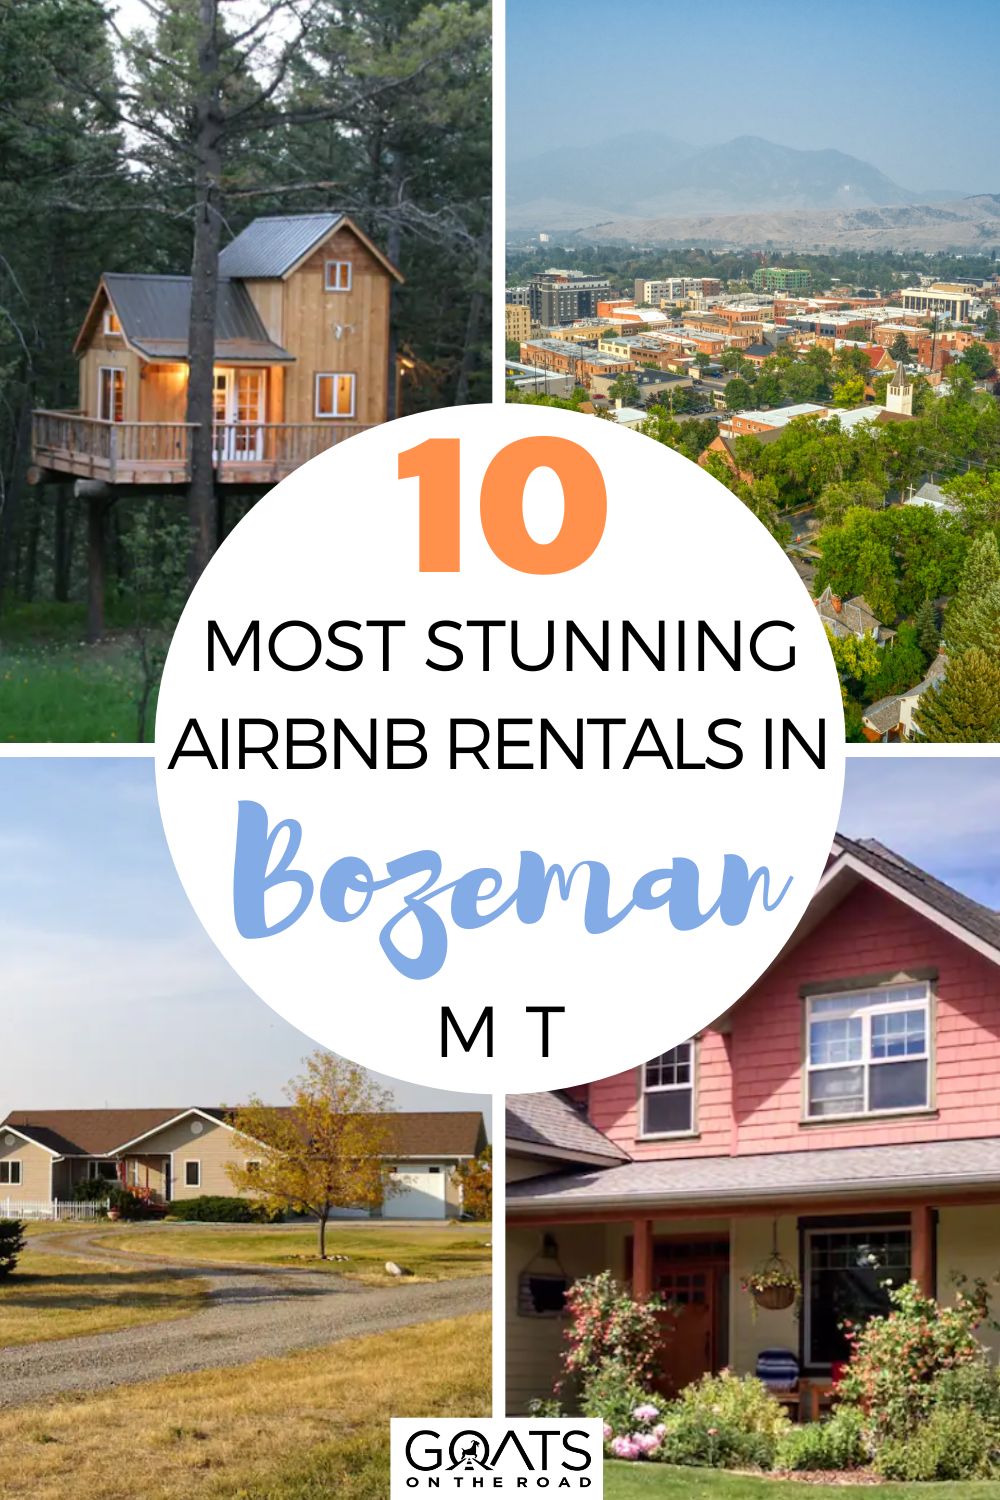 10 Most Stunning Airbnb Rental in Bozeman, MT